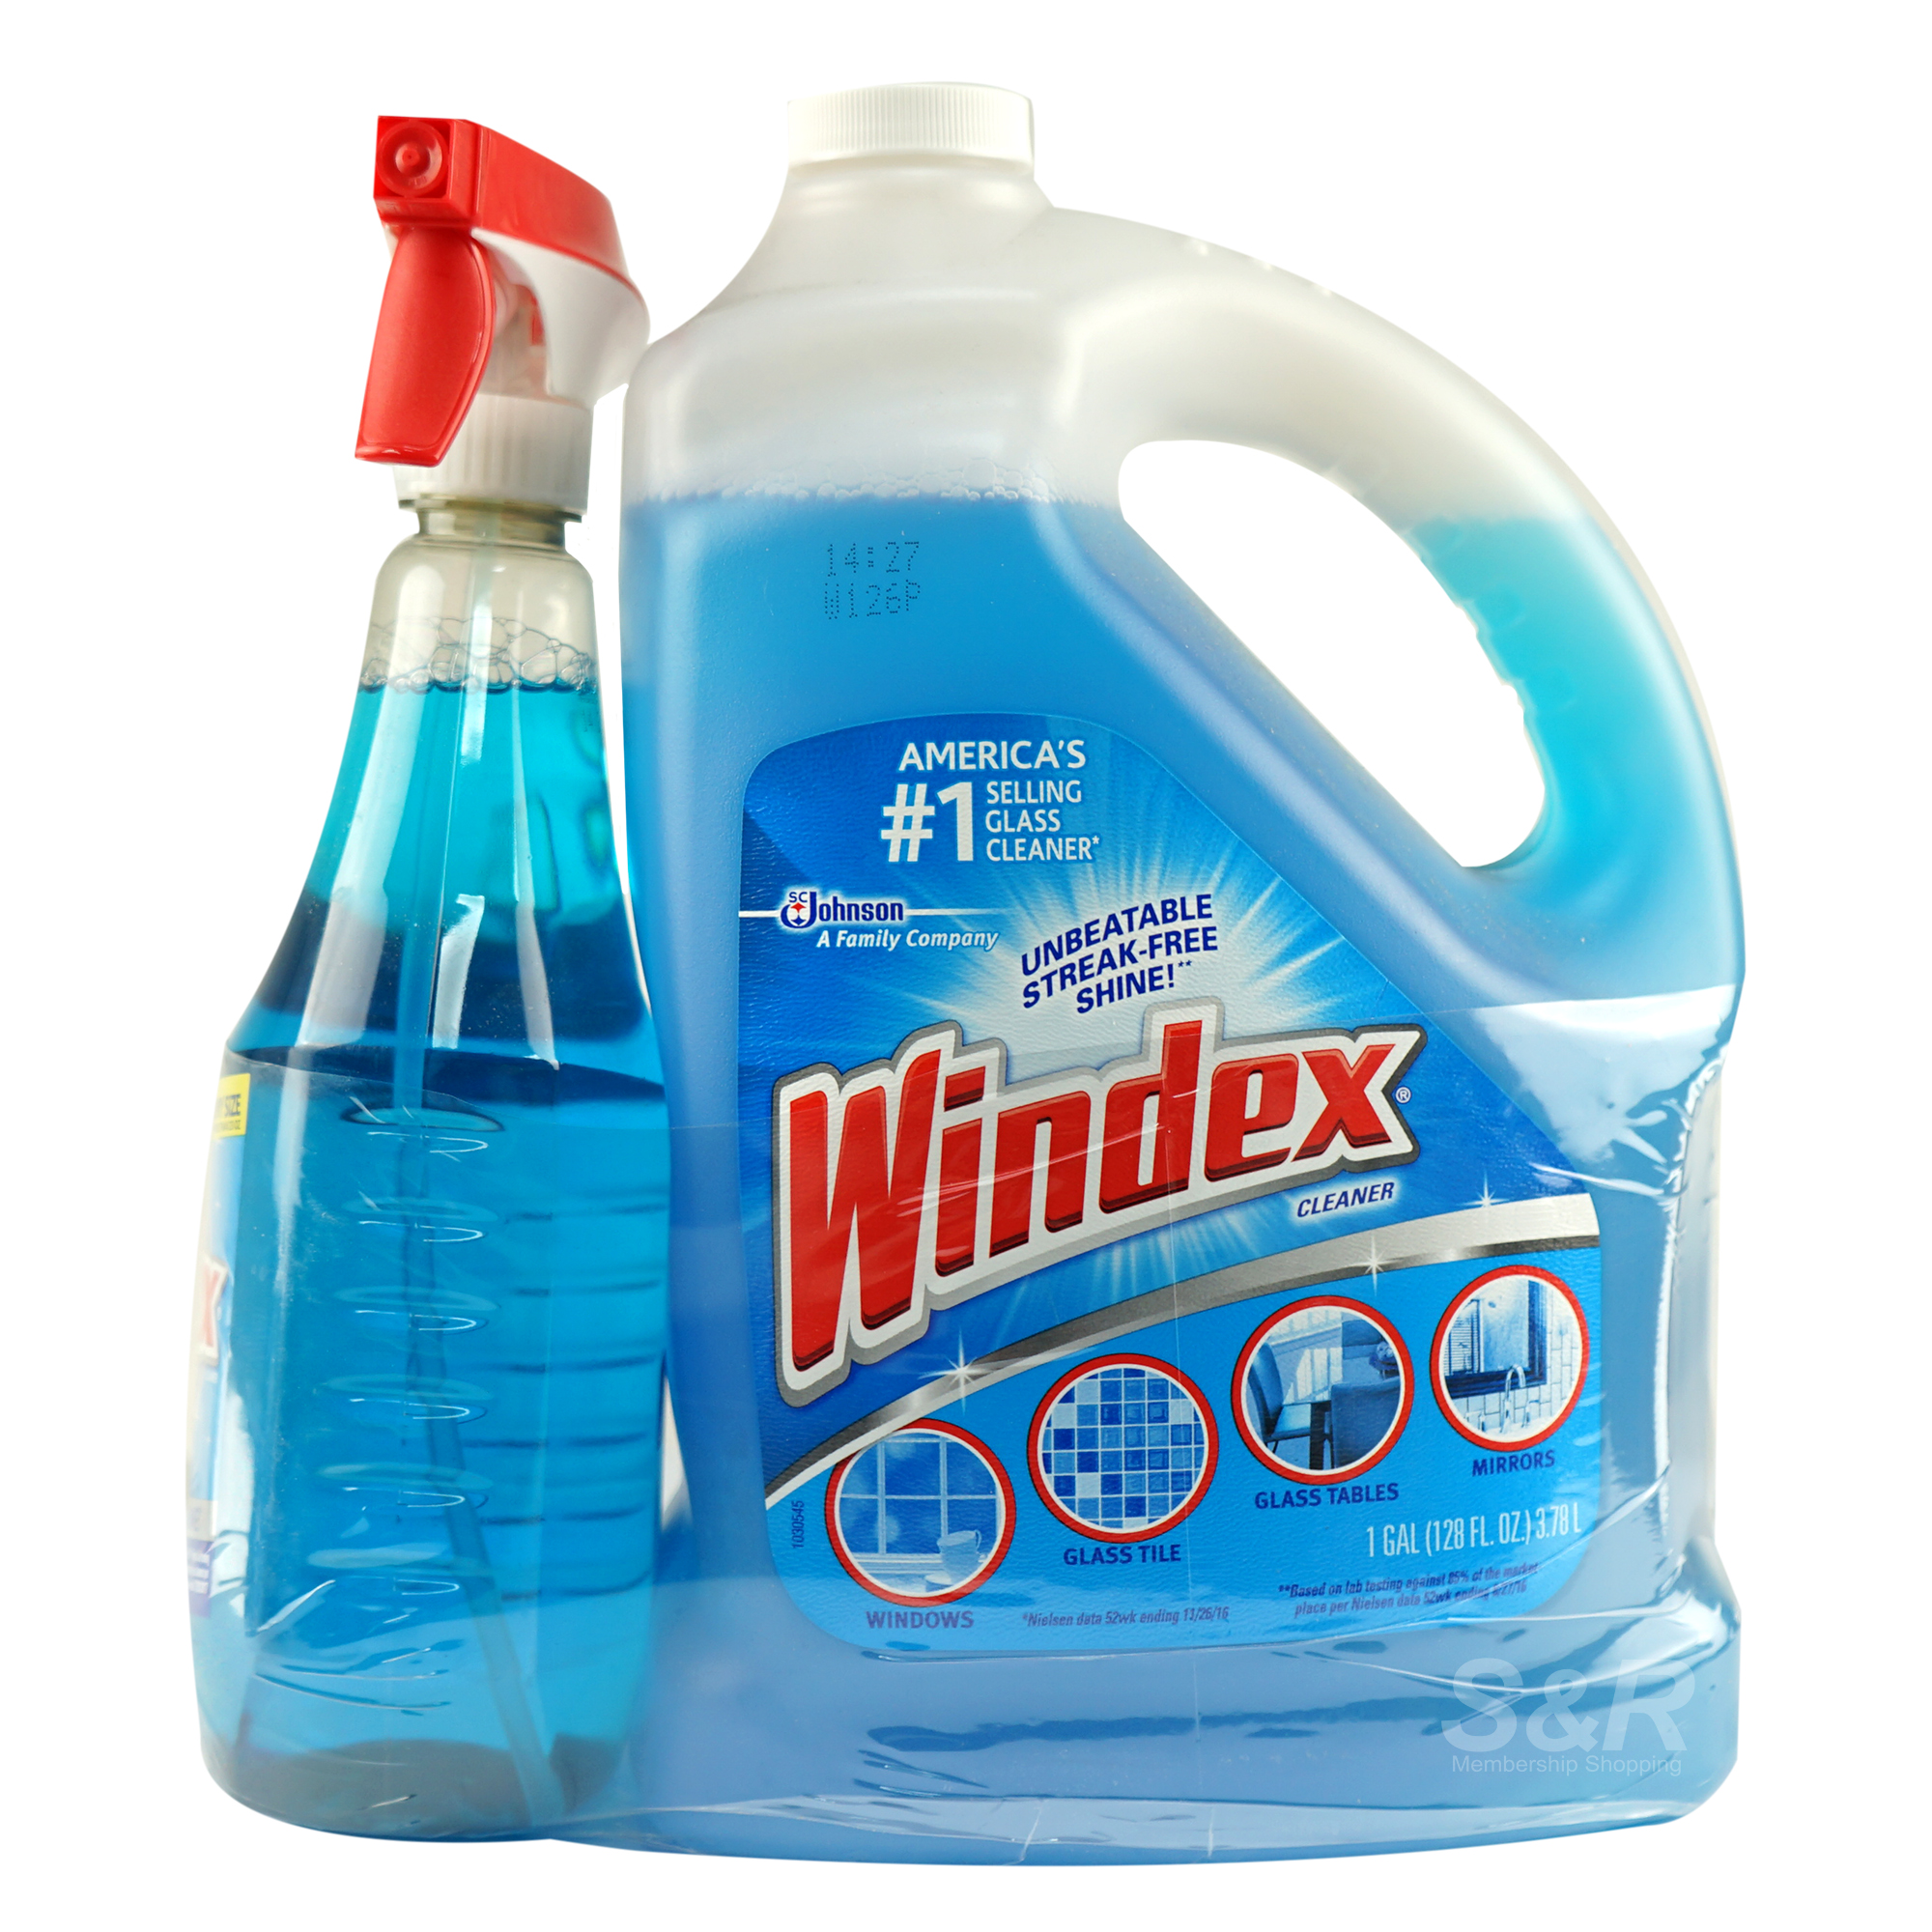 Windex Glass Cleaner 2 bottles